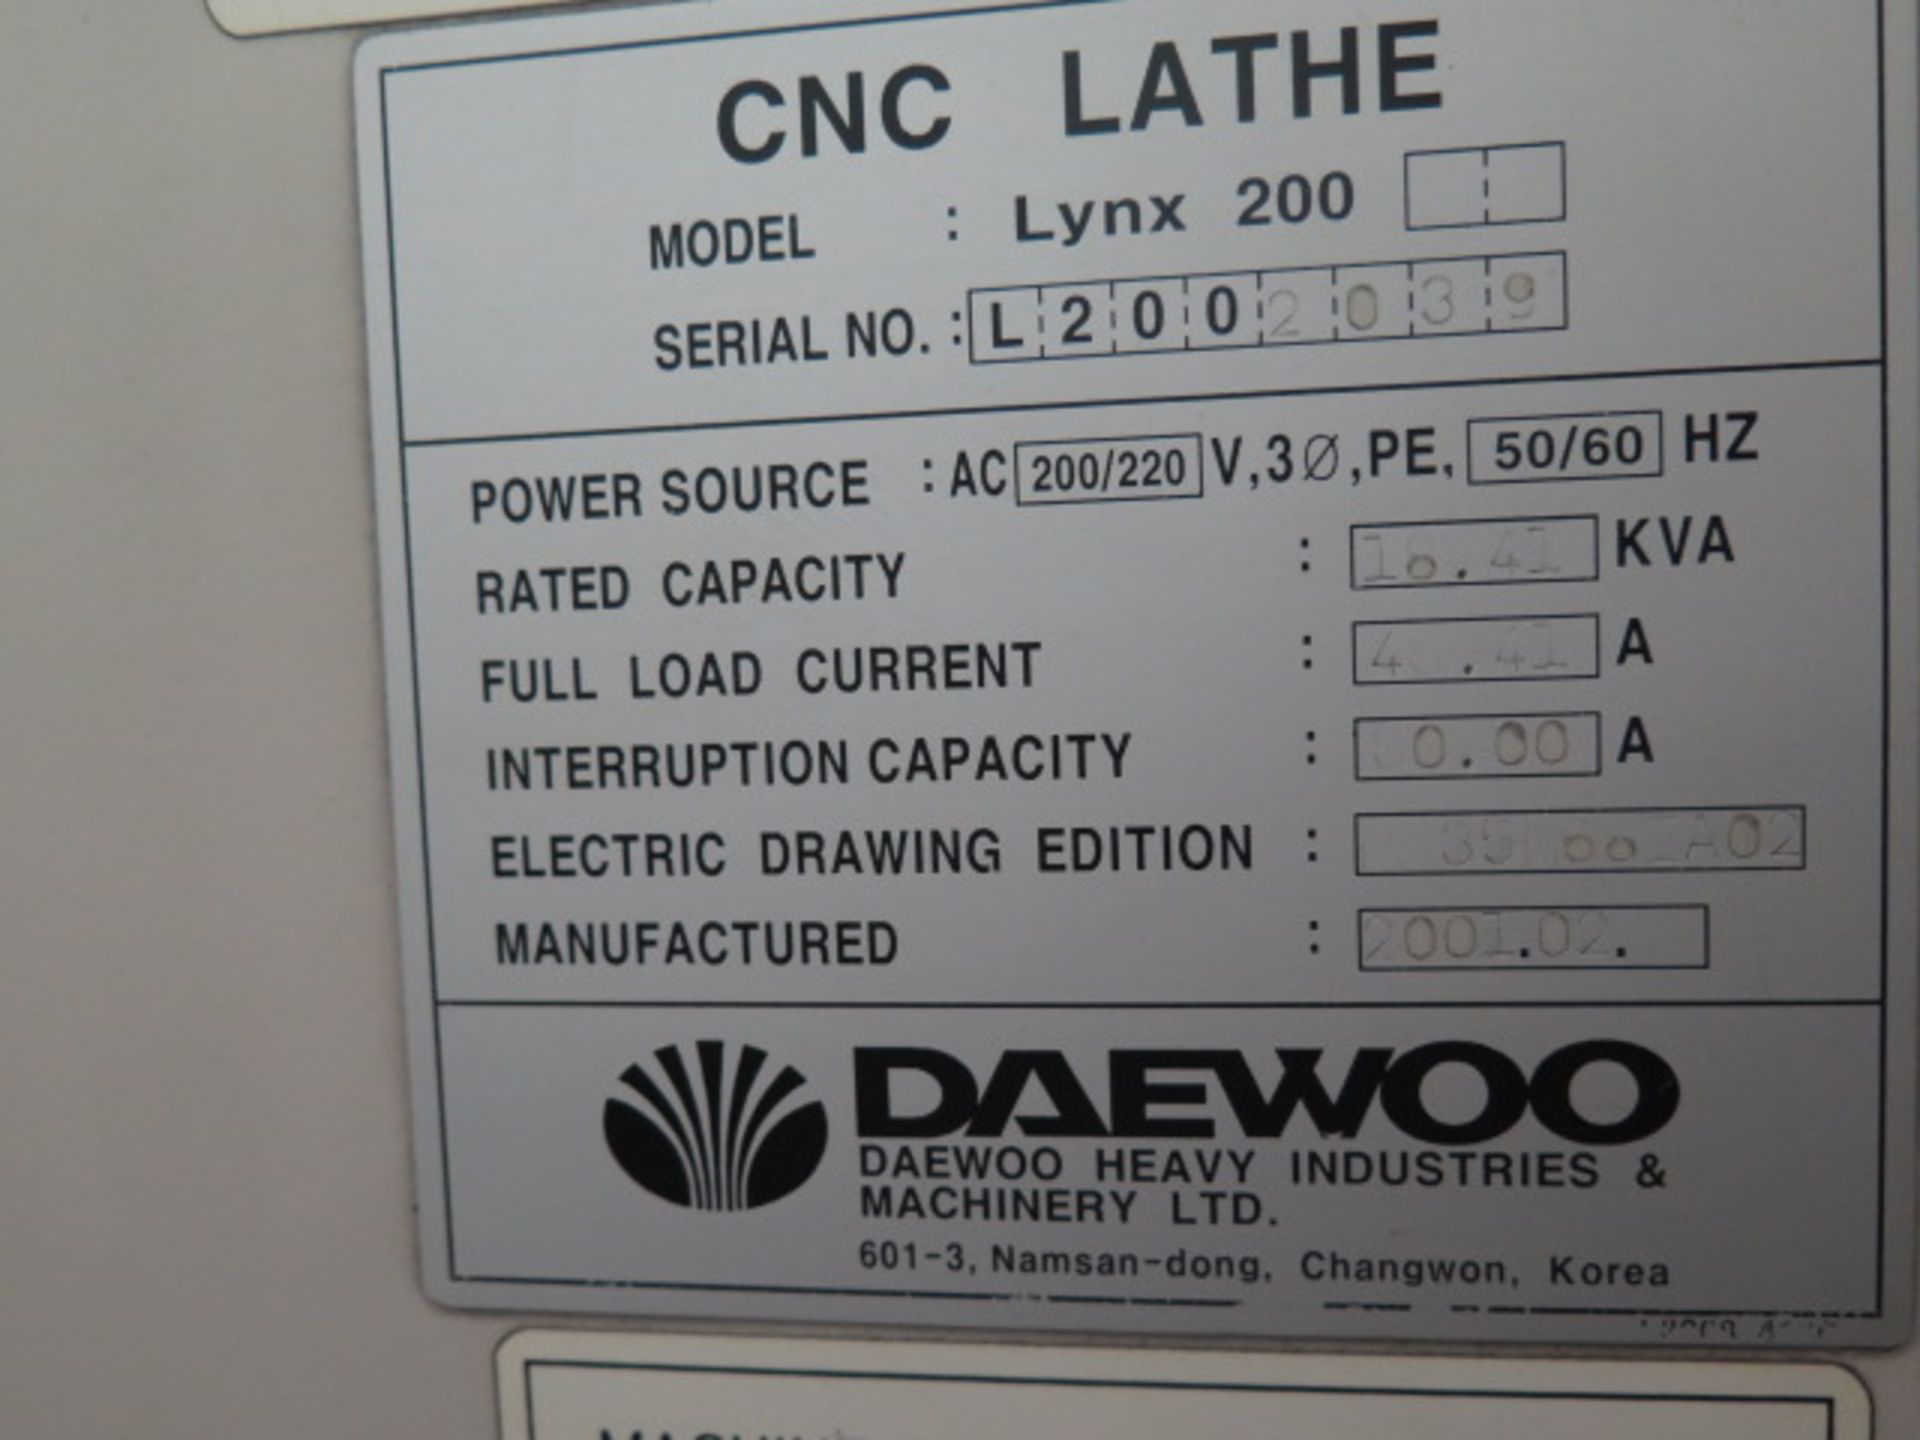 2001 Daewoo LYNX 200 CNC Turning Center s/n L2002039 w/ Fanuc Series 21i-T Controls, Tool Presetter, - Image 9 of 10